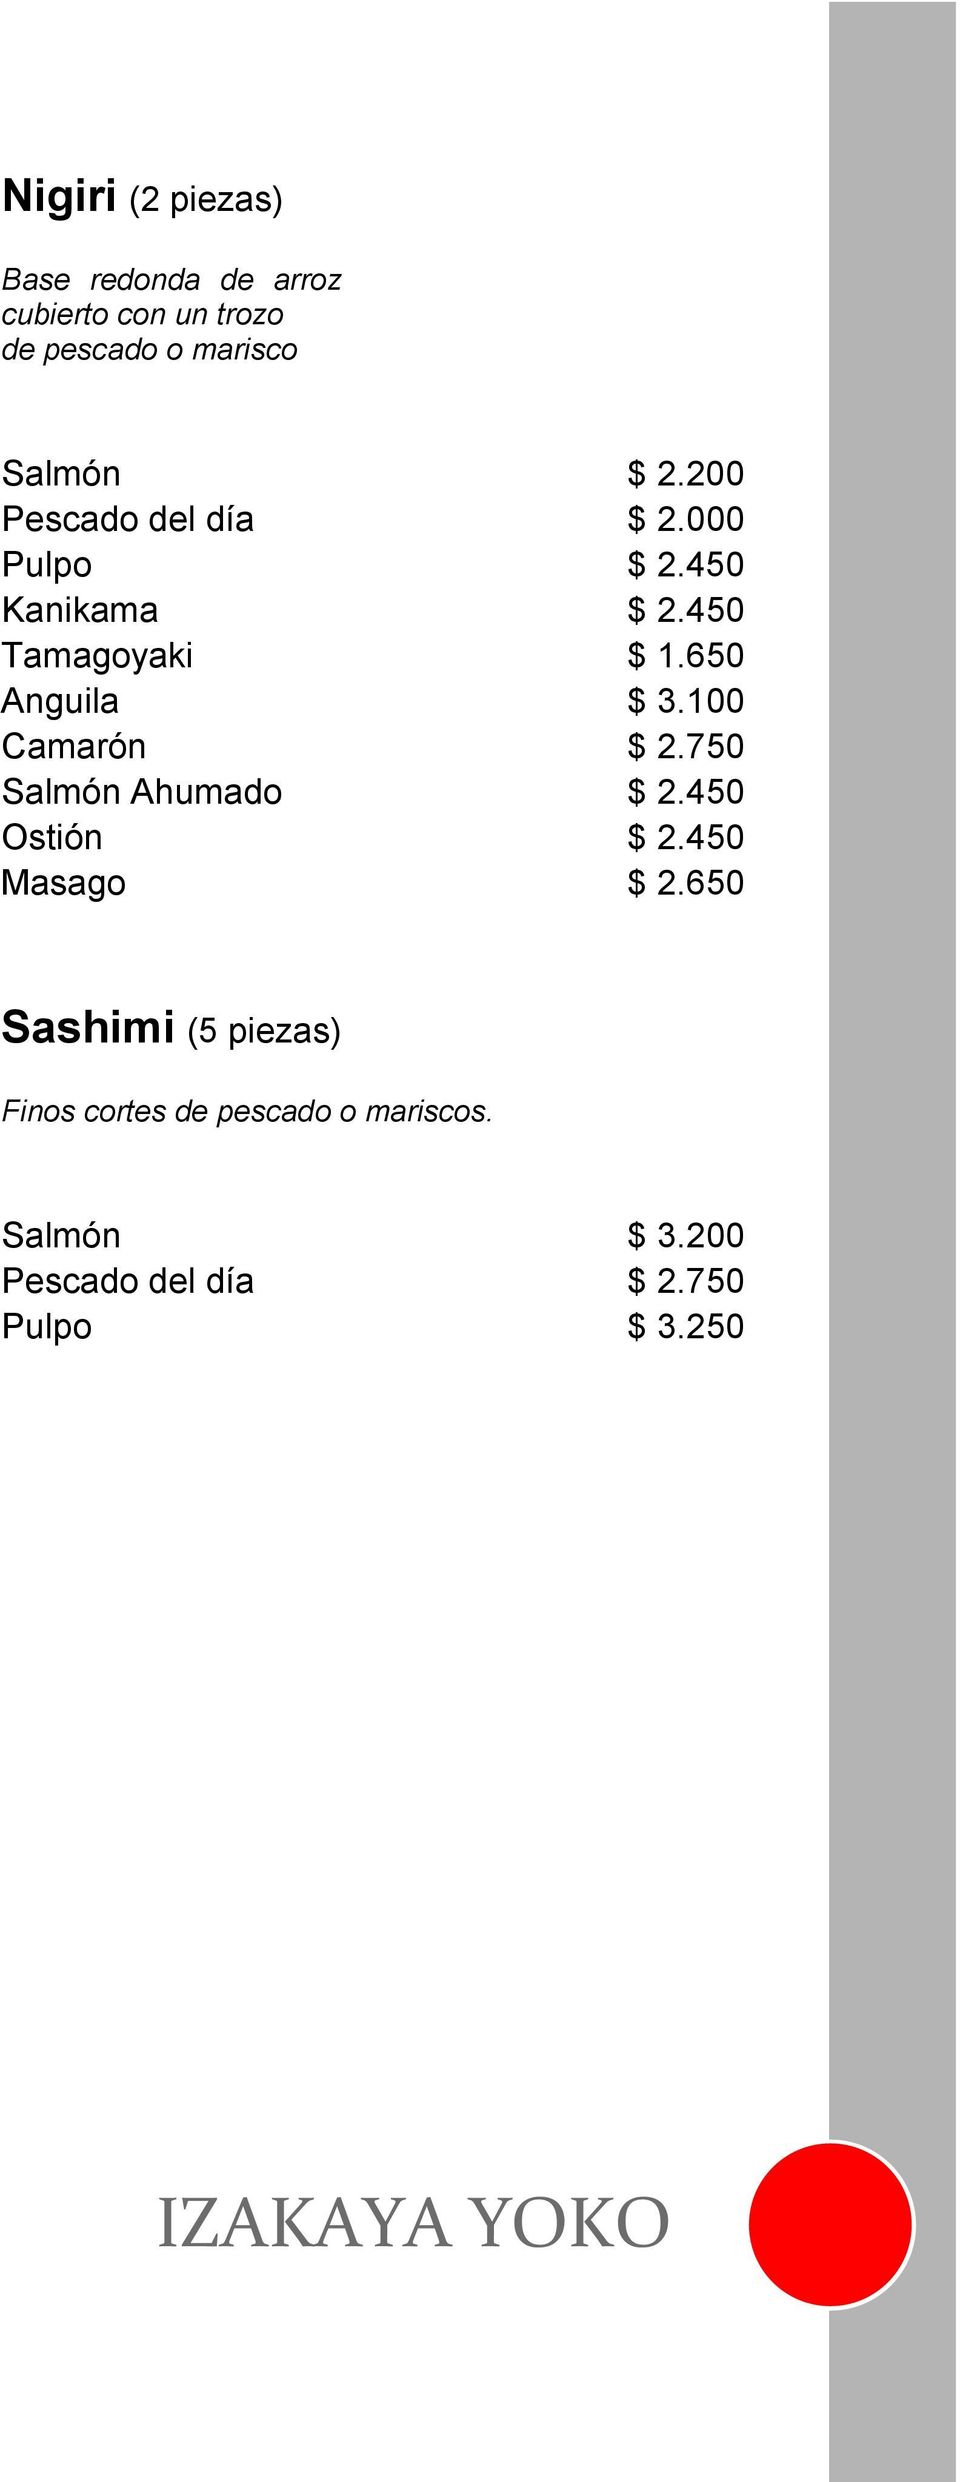 650 Anguila $ 3.100 Camarón $ 2.750 Salmón Ahumado $ 2.450 Ostión $ 2.450 Masago $ 2.